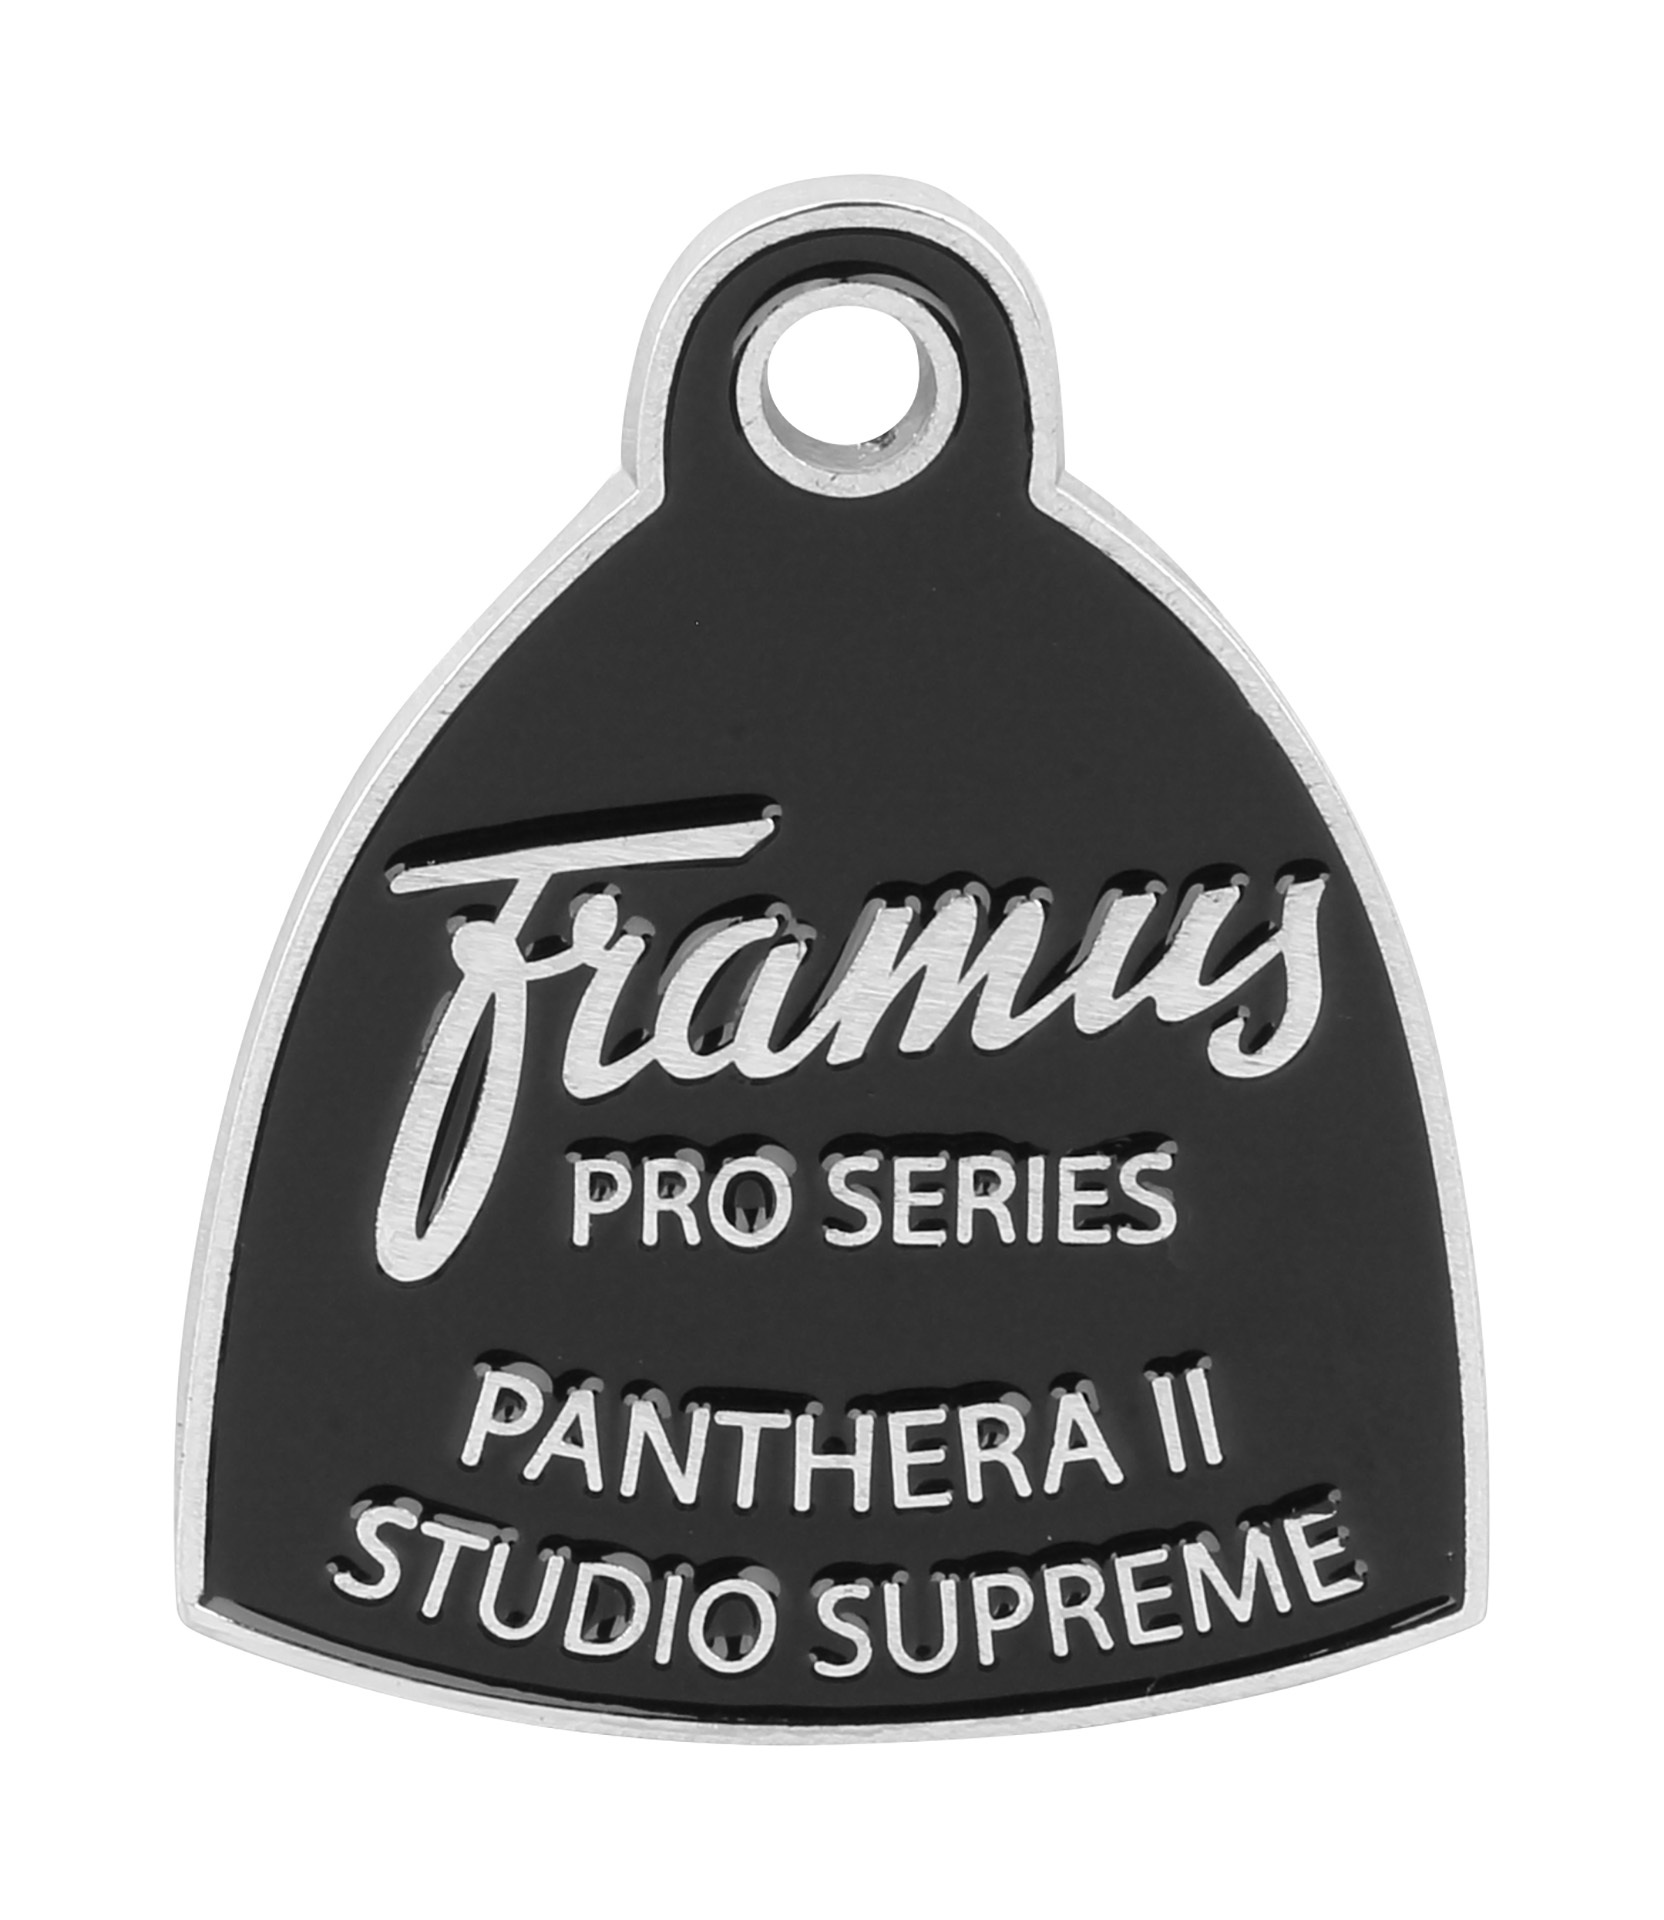 Trussrodcover Framus Pro Series Panthera II Studio Supreme